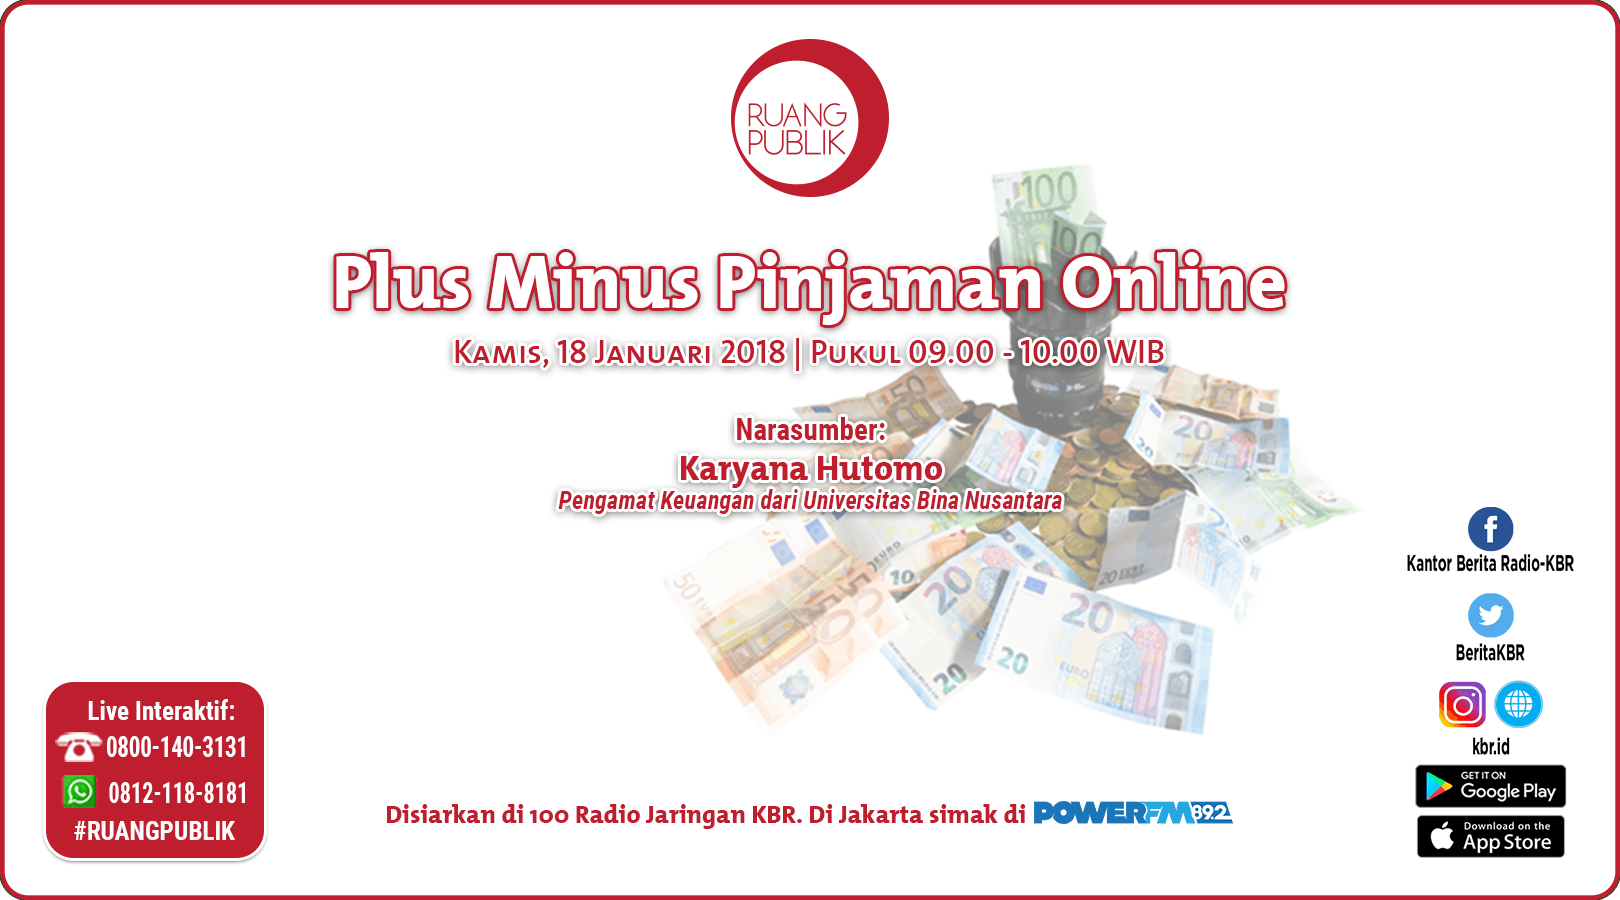 Plus Minus Pinjaman Online